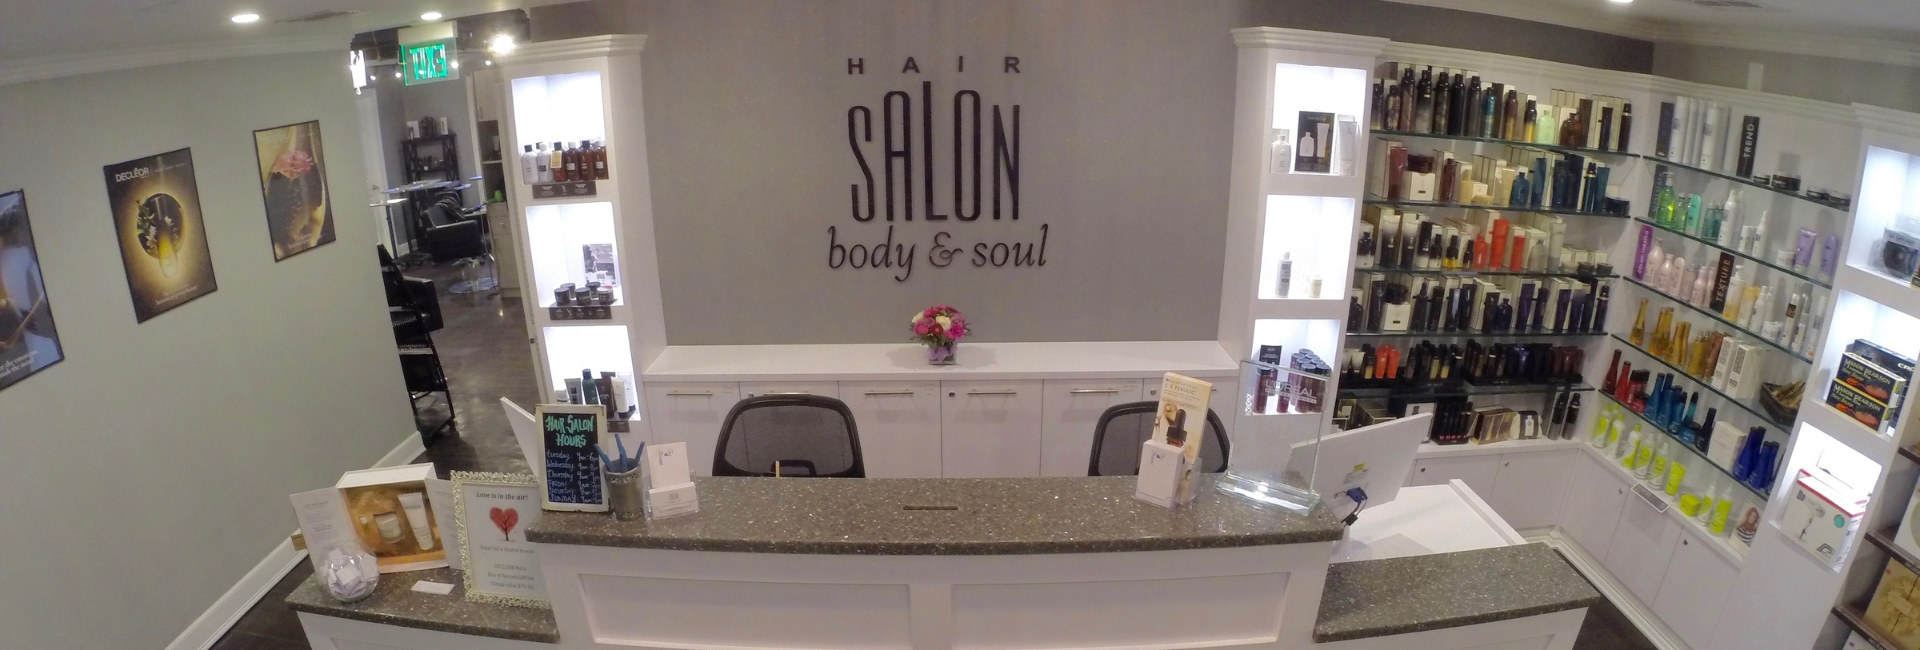 Contact | Hair Salon Body & Soul | New Providence, NJ